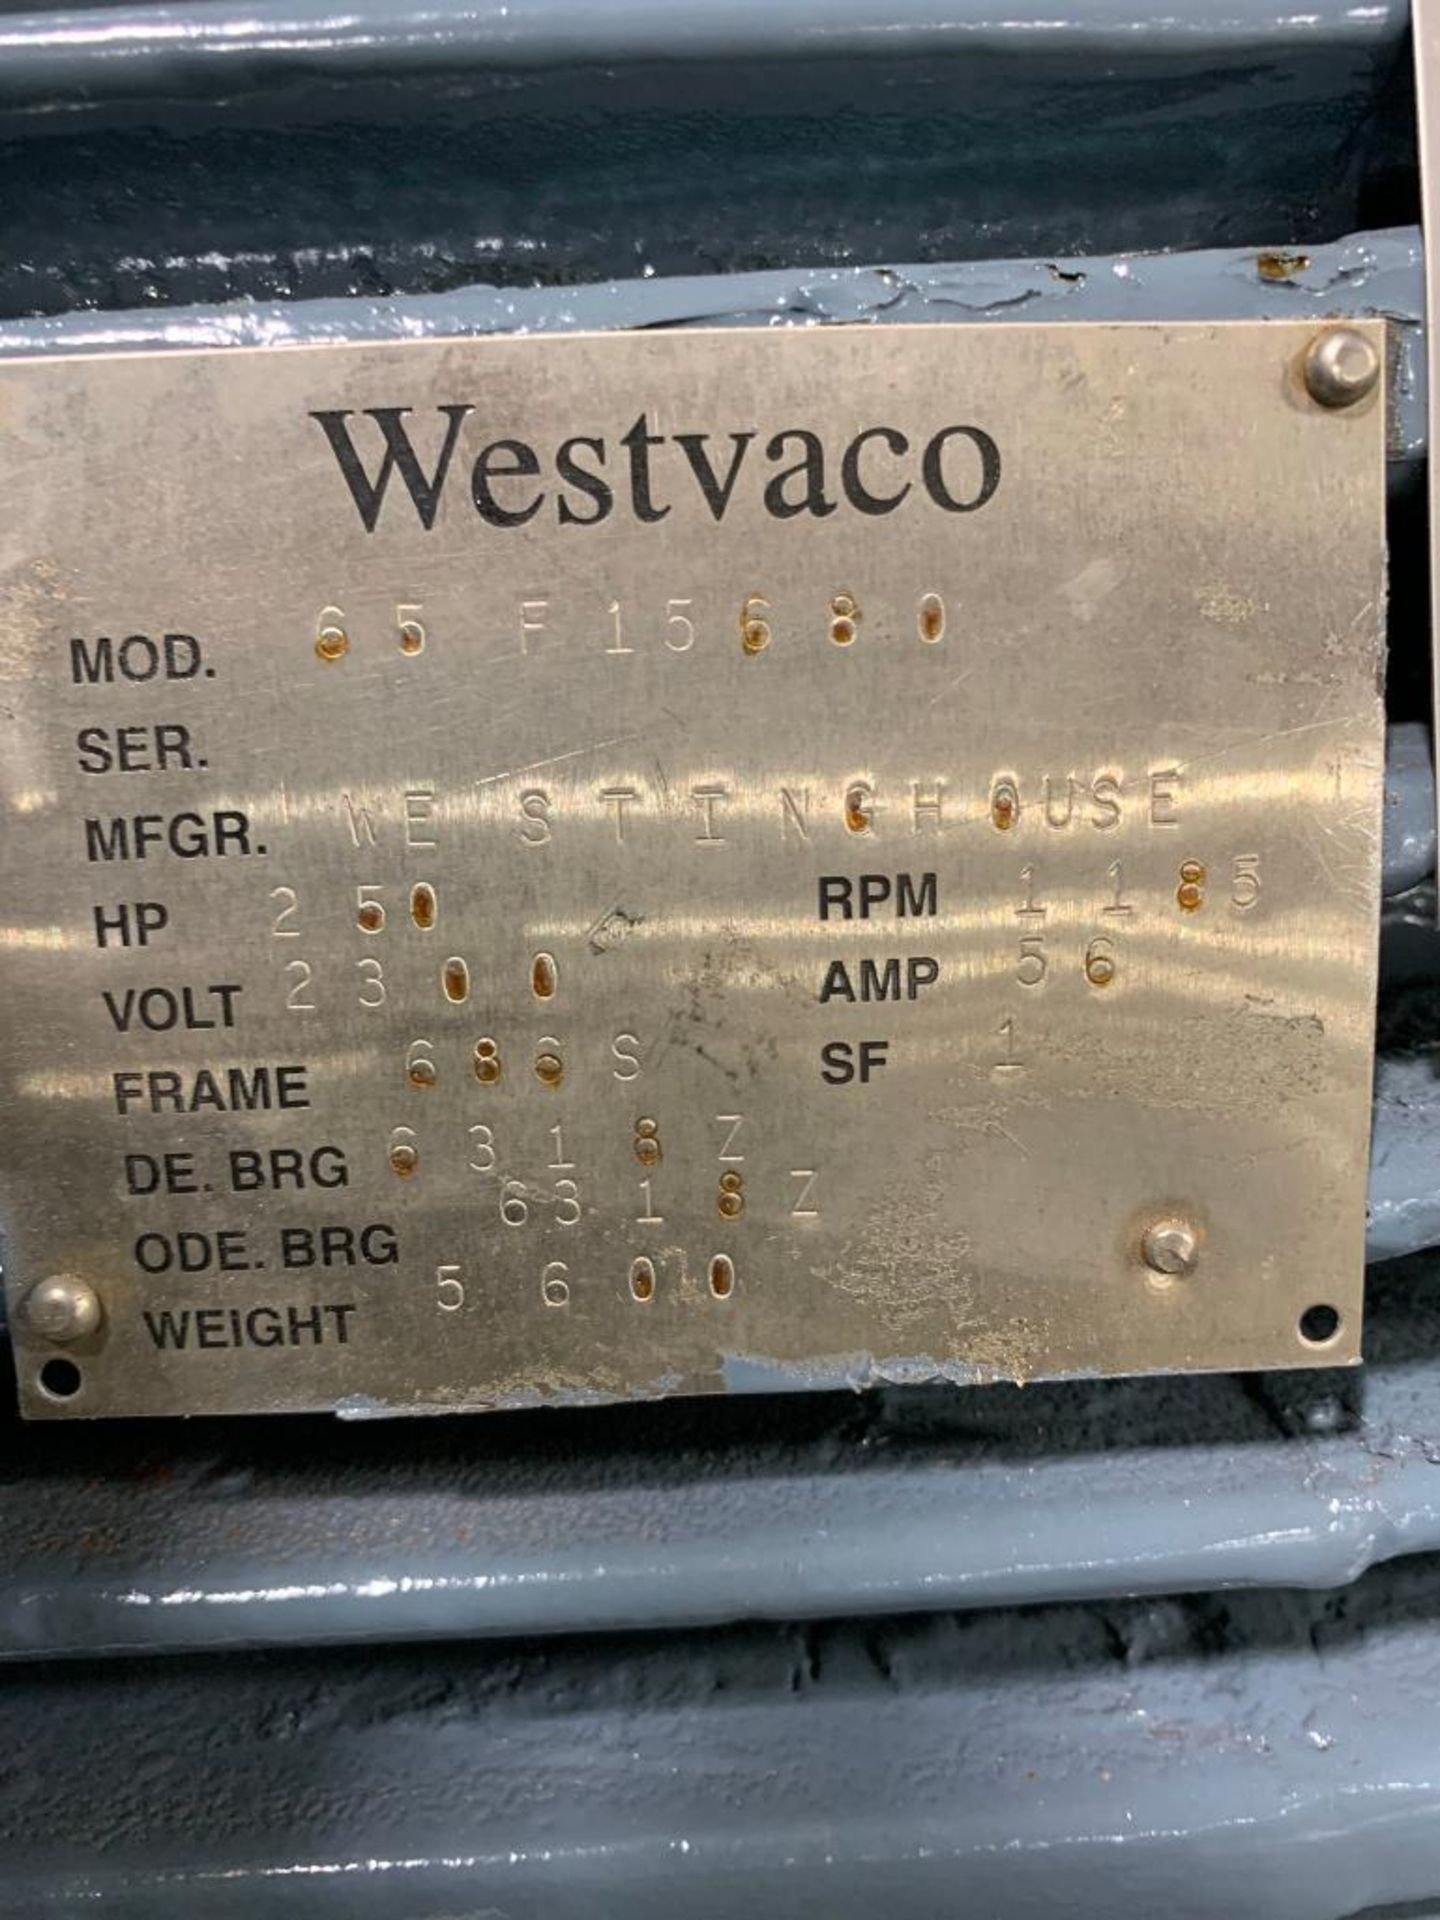 Westvaco 250-HP Electric Motor, 1185 RPM, 2300 V, 3 PH, FR: 686S - Image 3 of 3